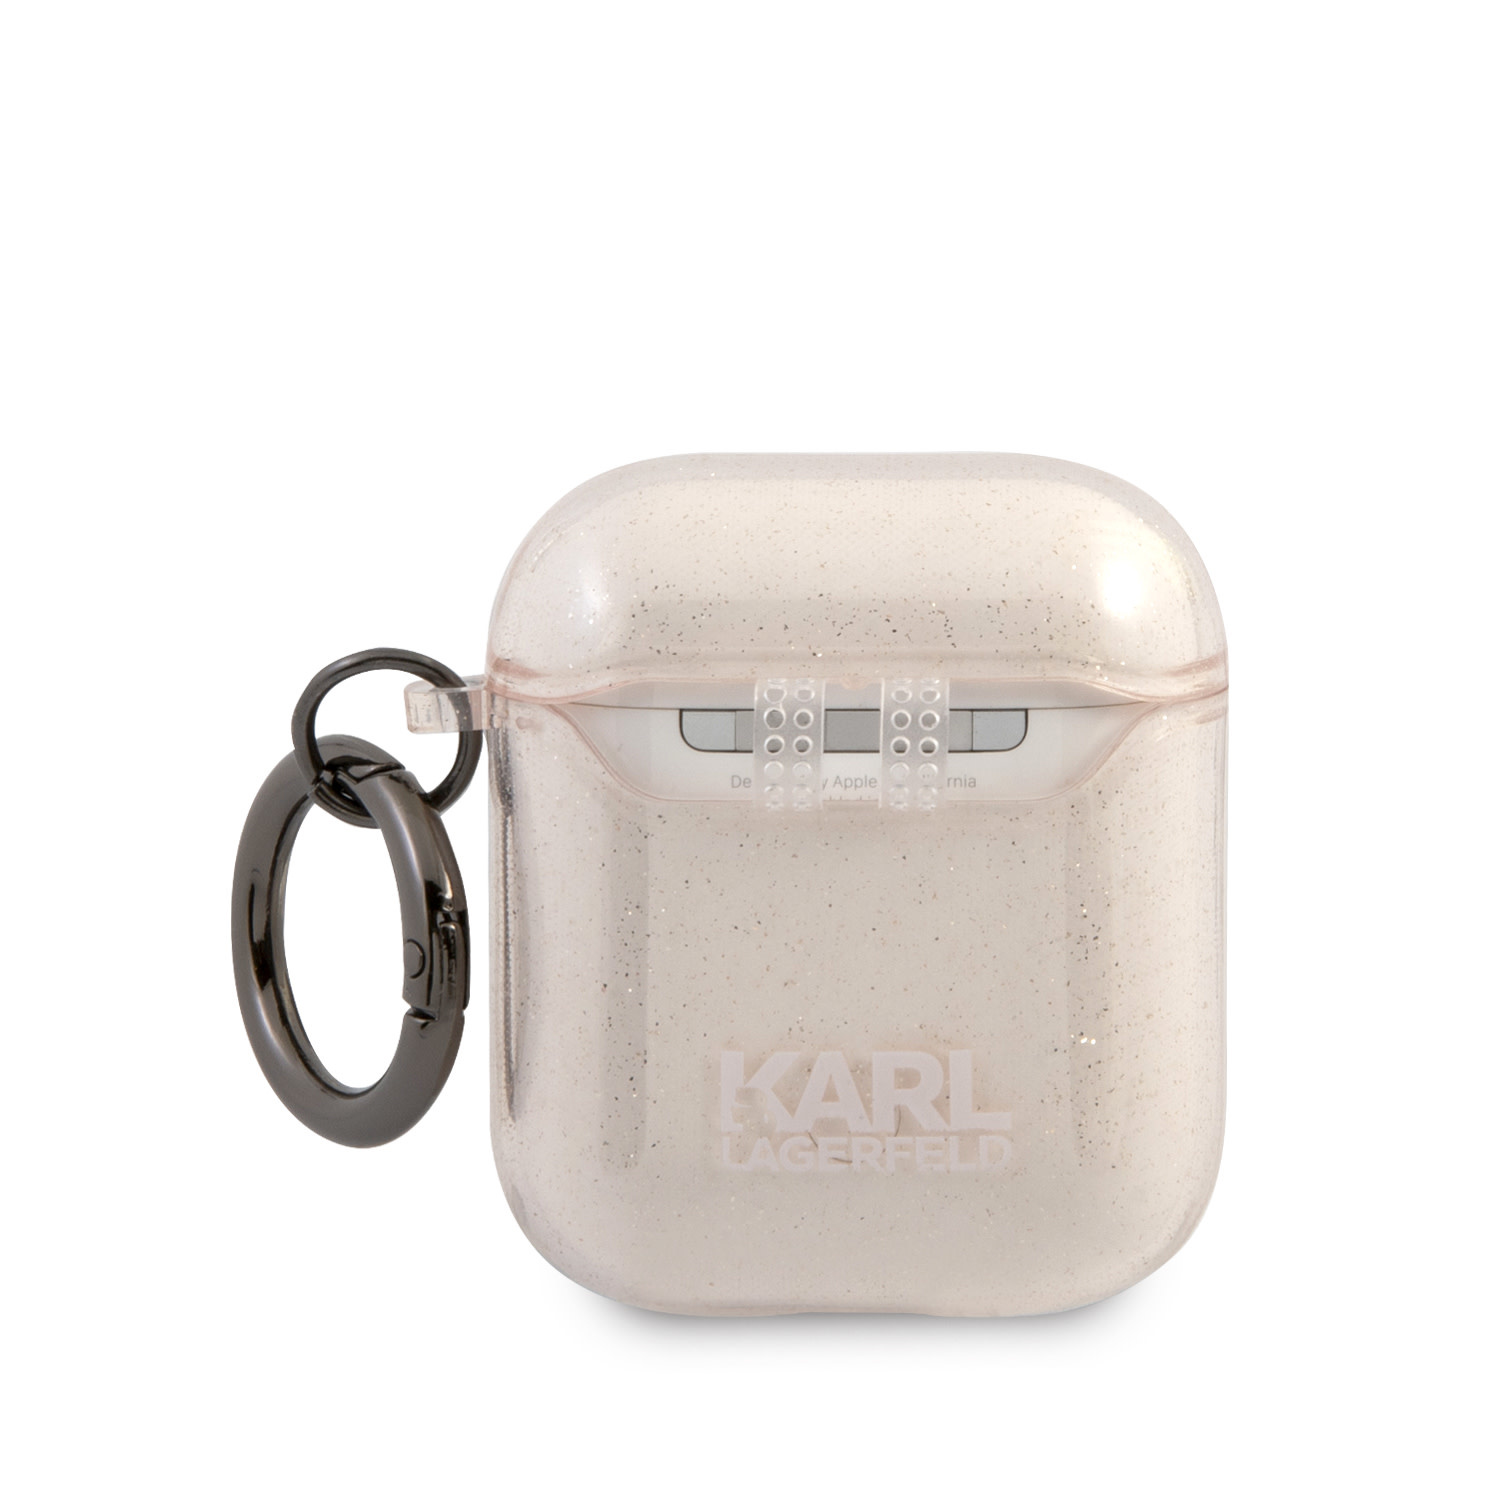 Karl Lagerfeld Airpods - Airpods 2 Tok - Glitter -